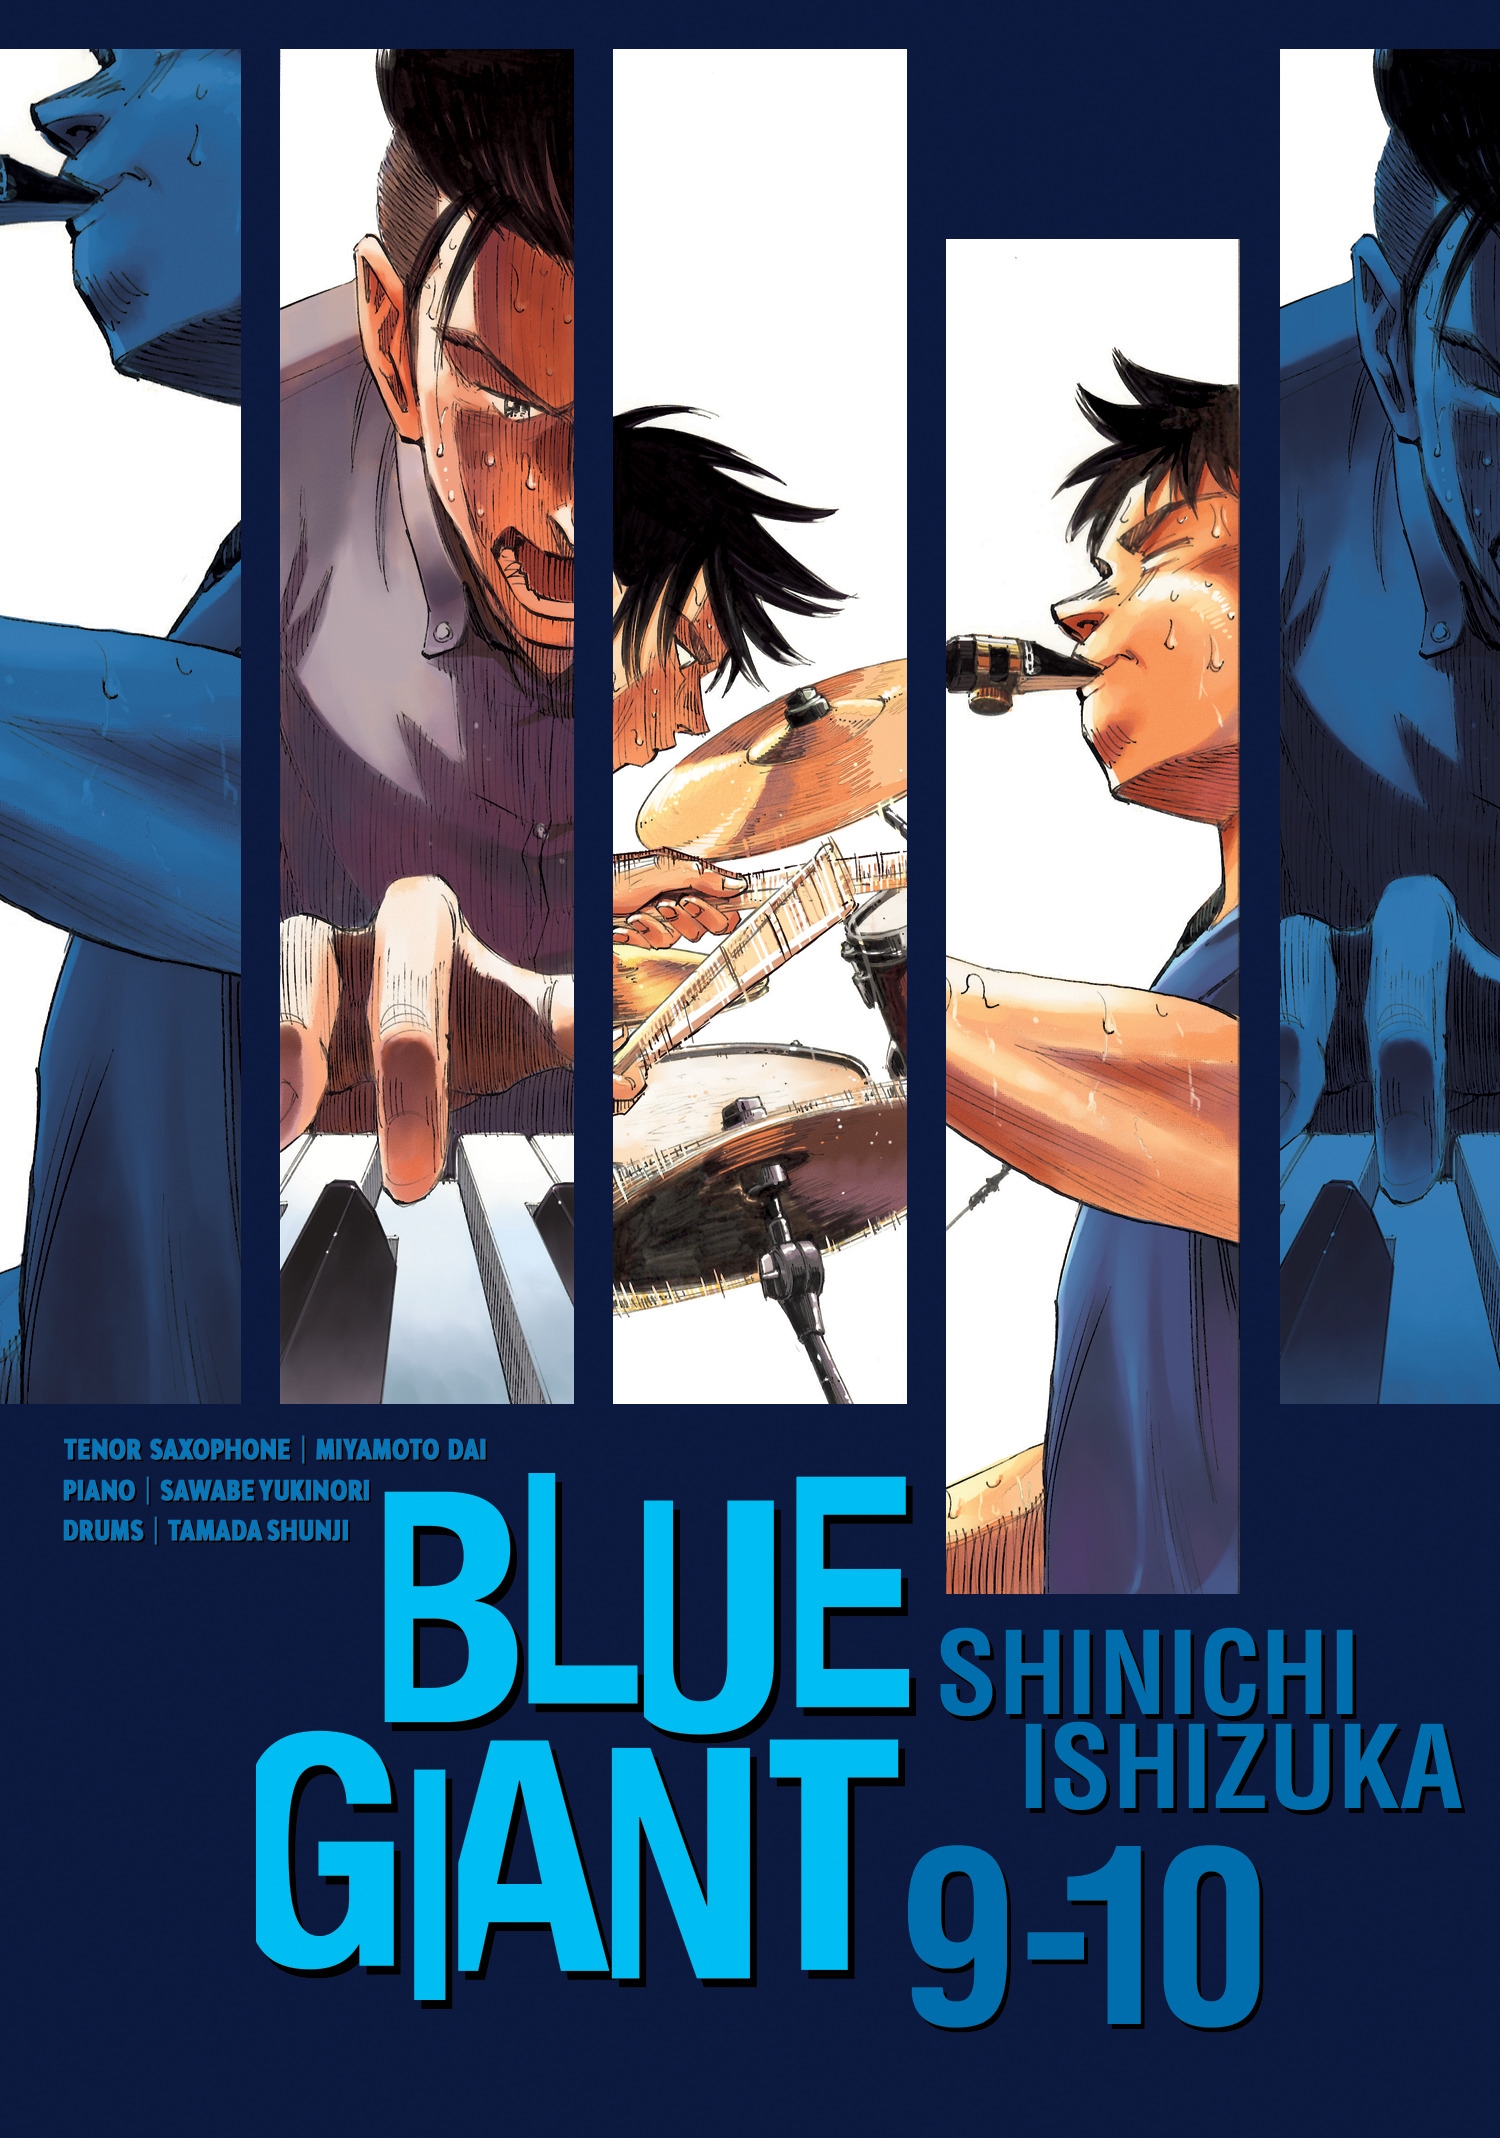 Blue Giant Omnibus Vols. 9-10 by Shinichi Ishizuka - Penguin Books